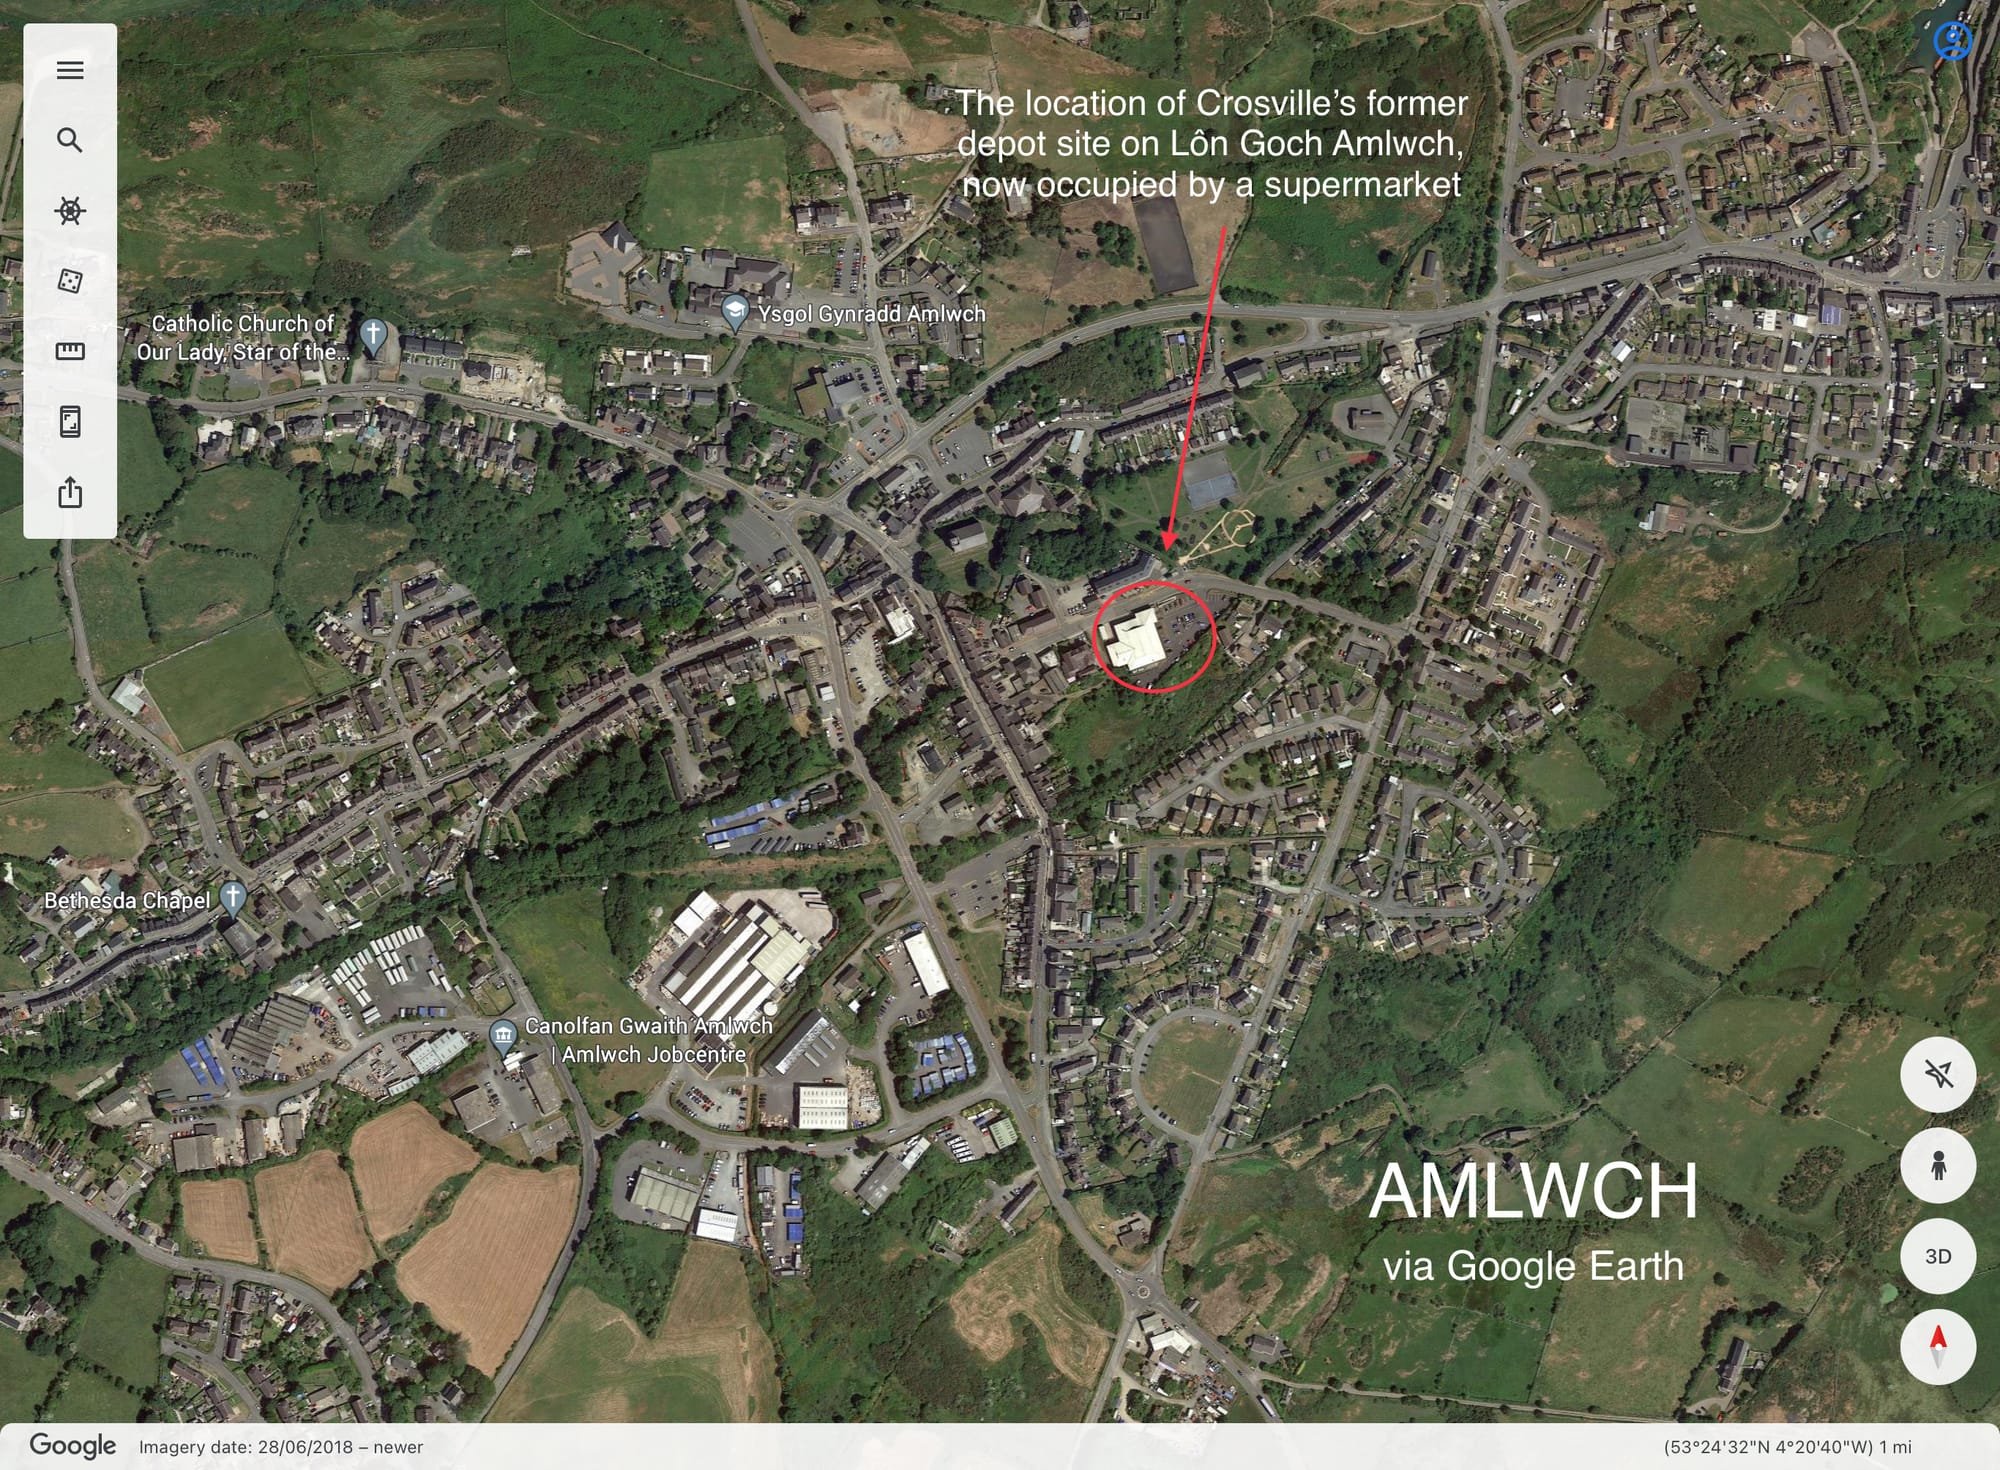 Crosville’s former Amlwch depot site via Google Earth